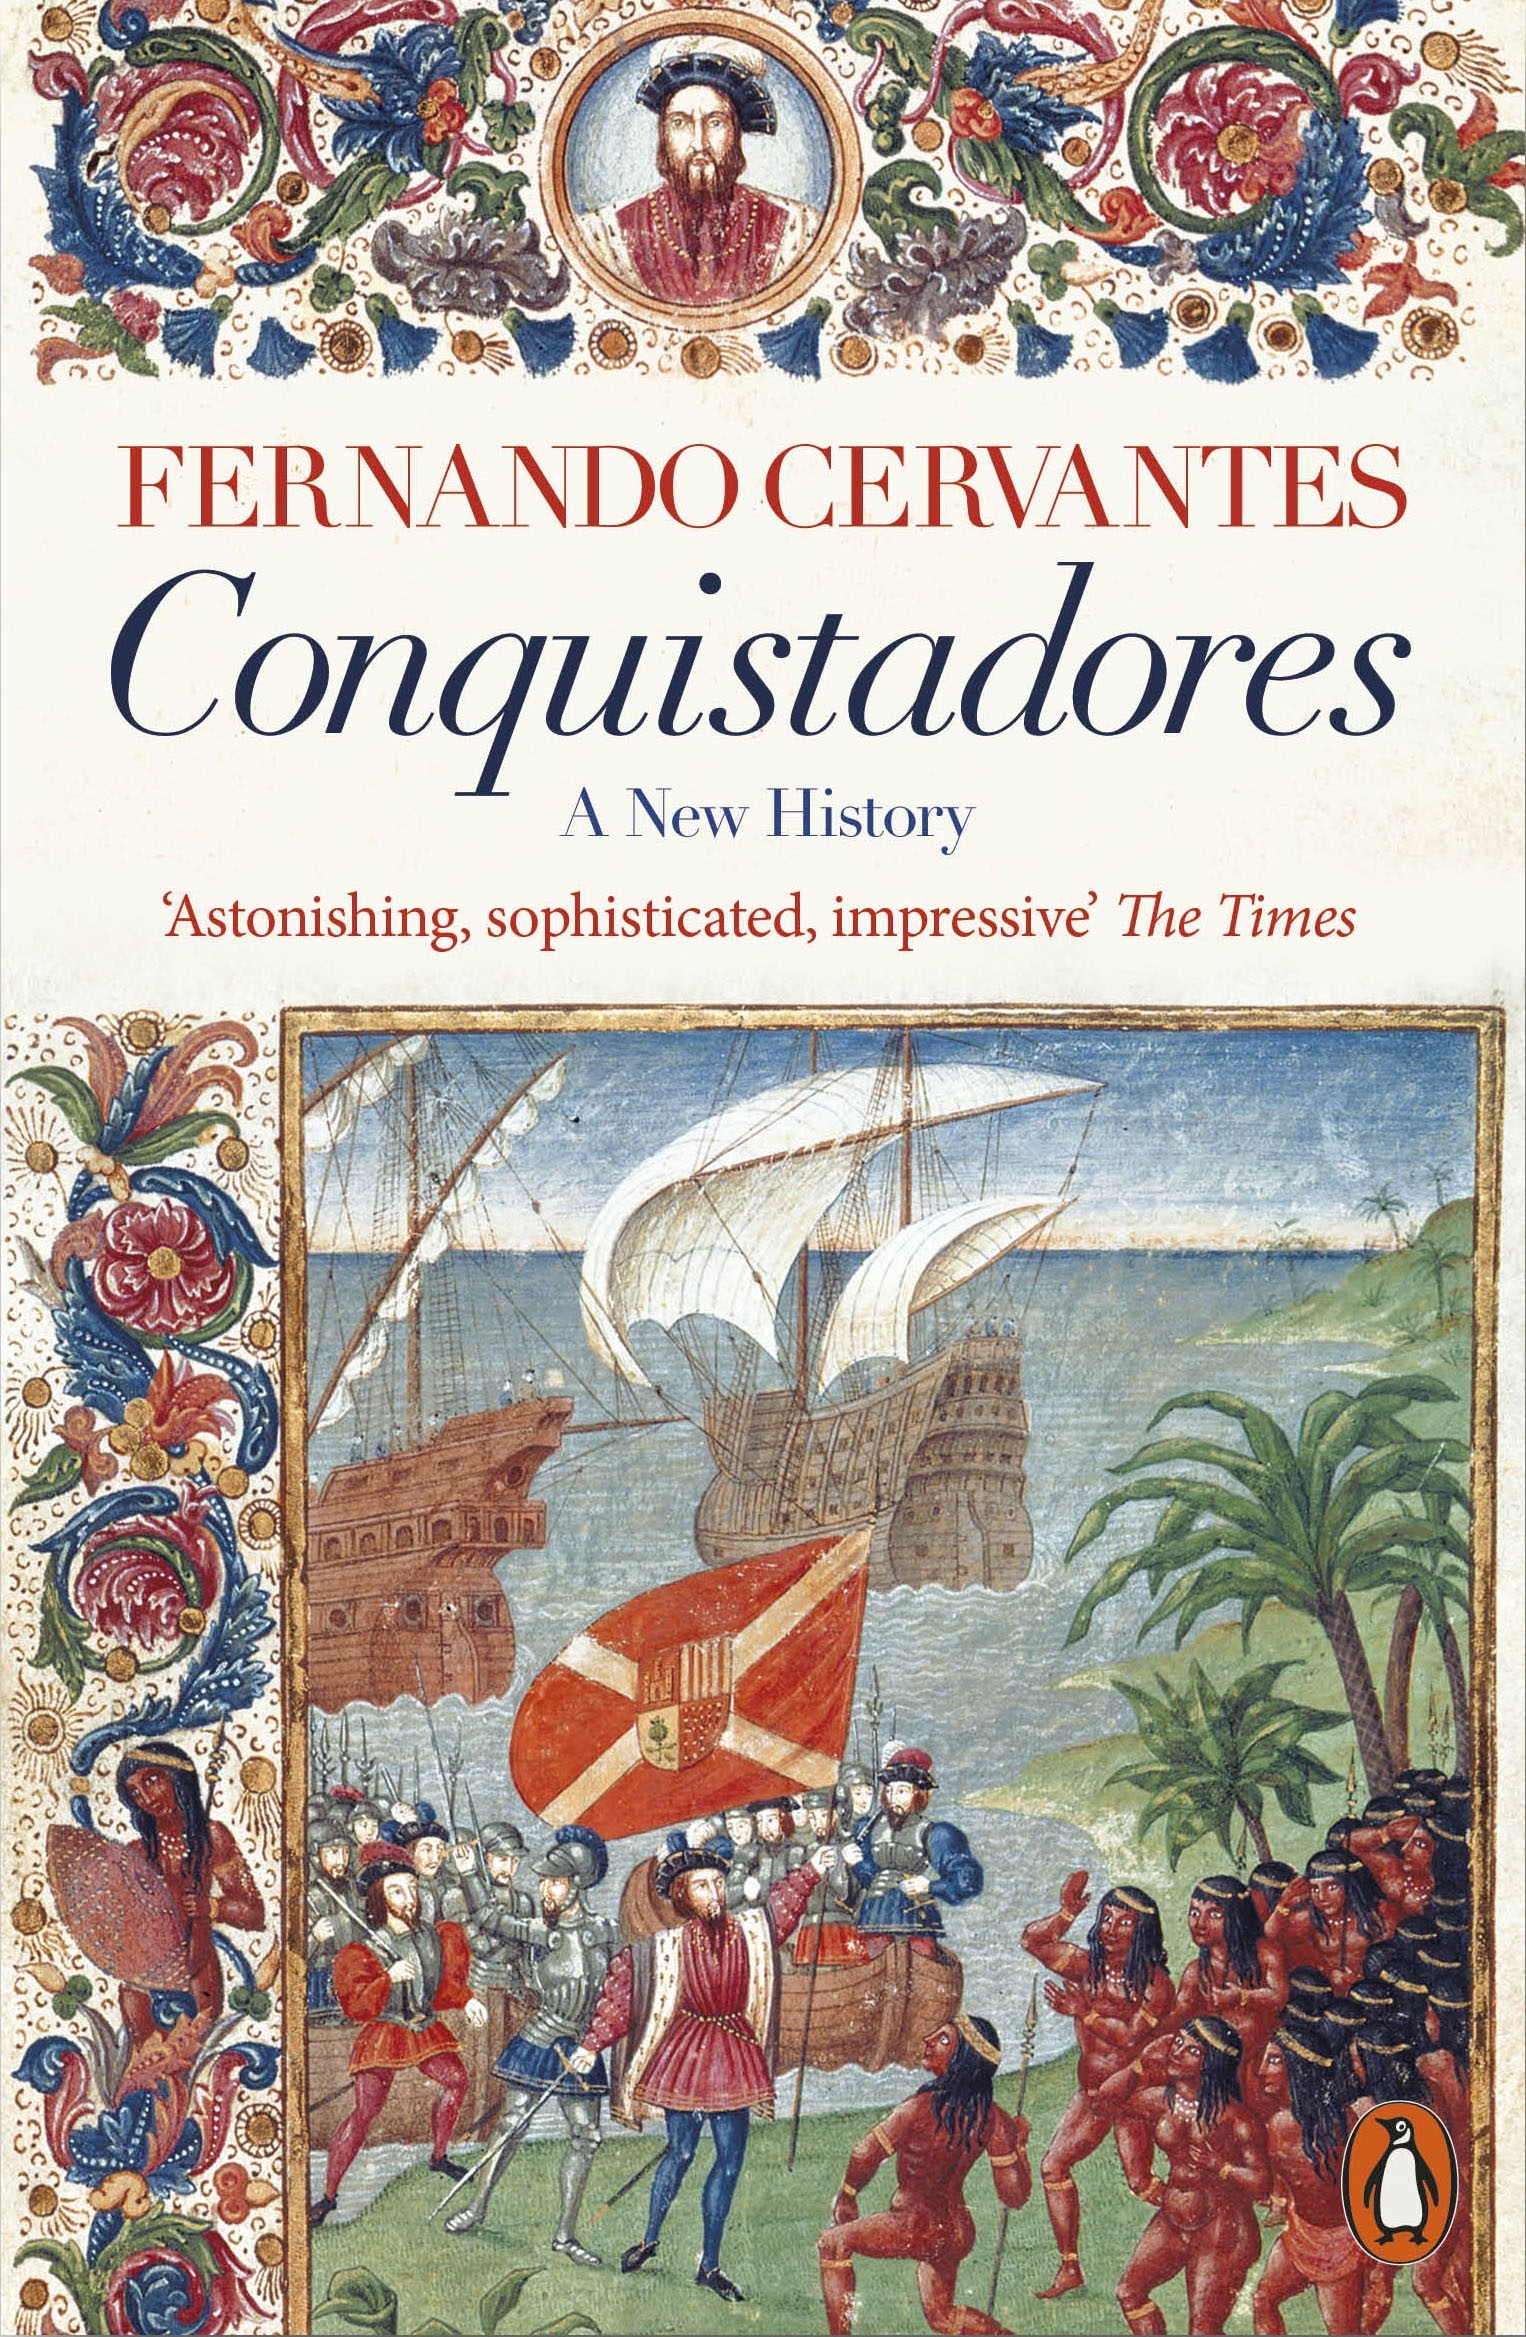 Book “Conquistadores” by Fernando Cervantes — October 7, 2021